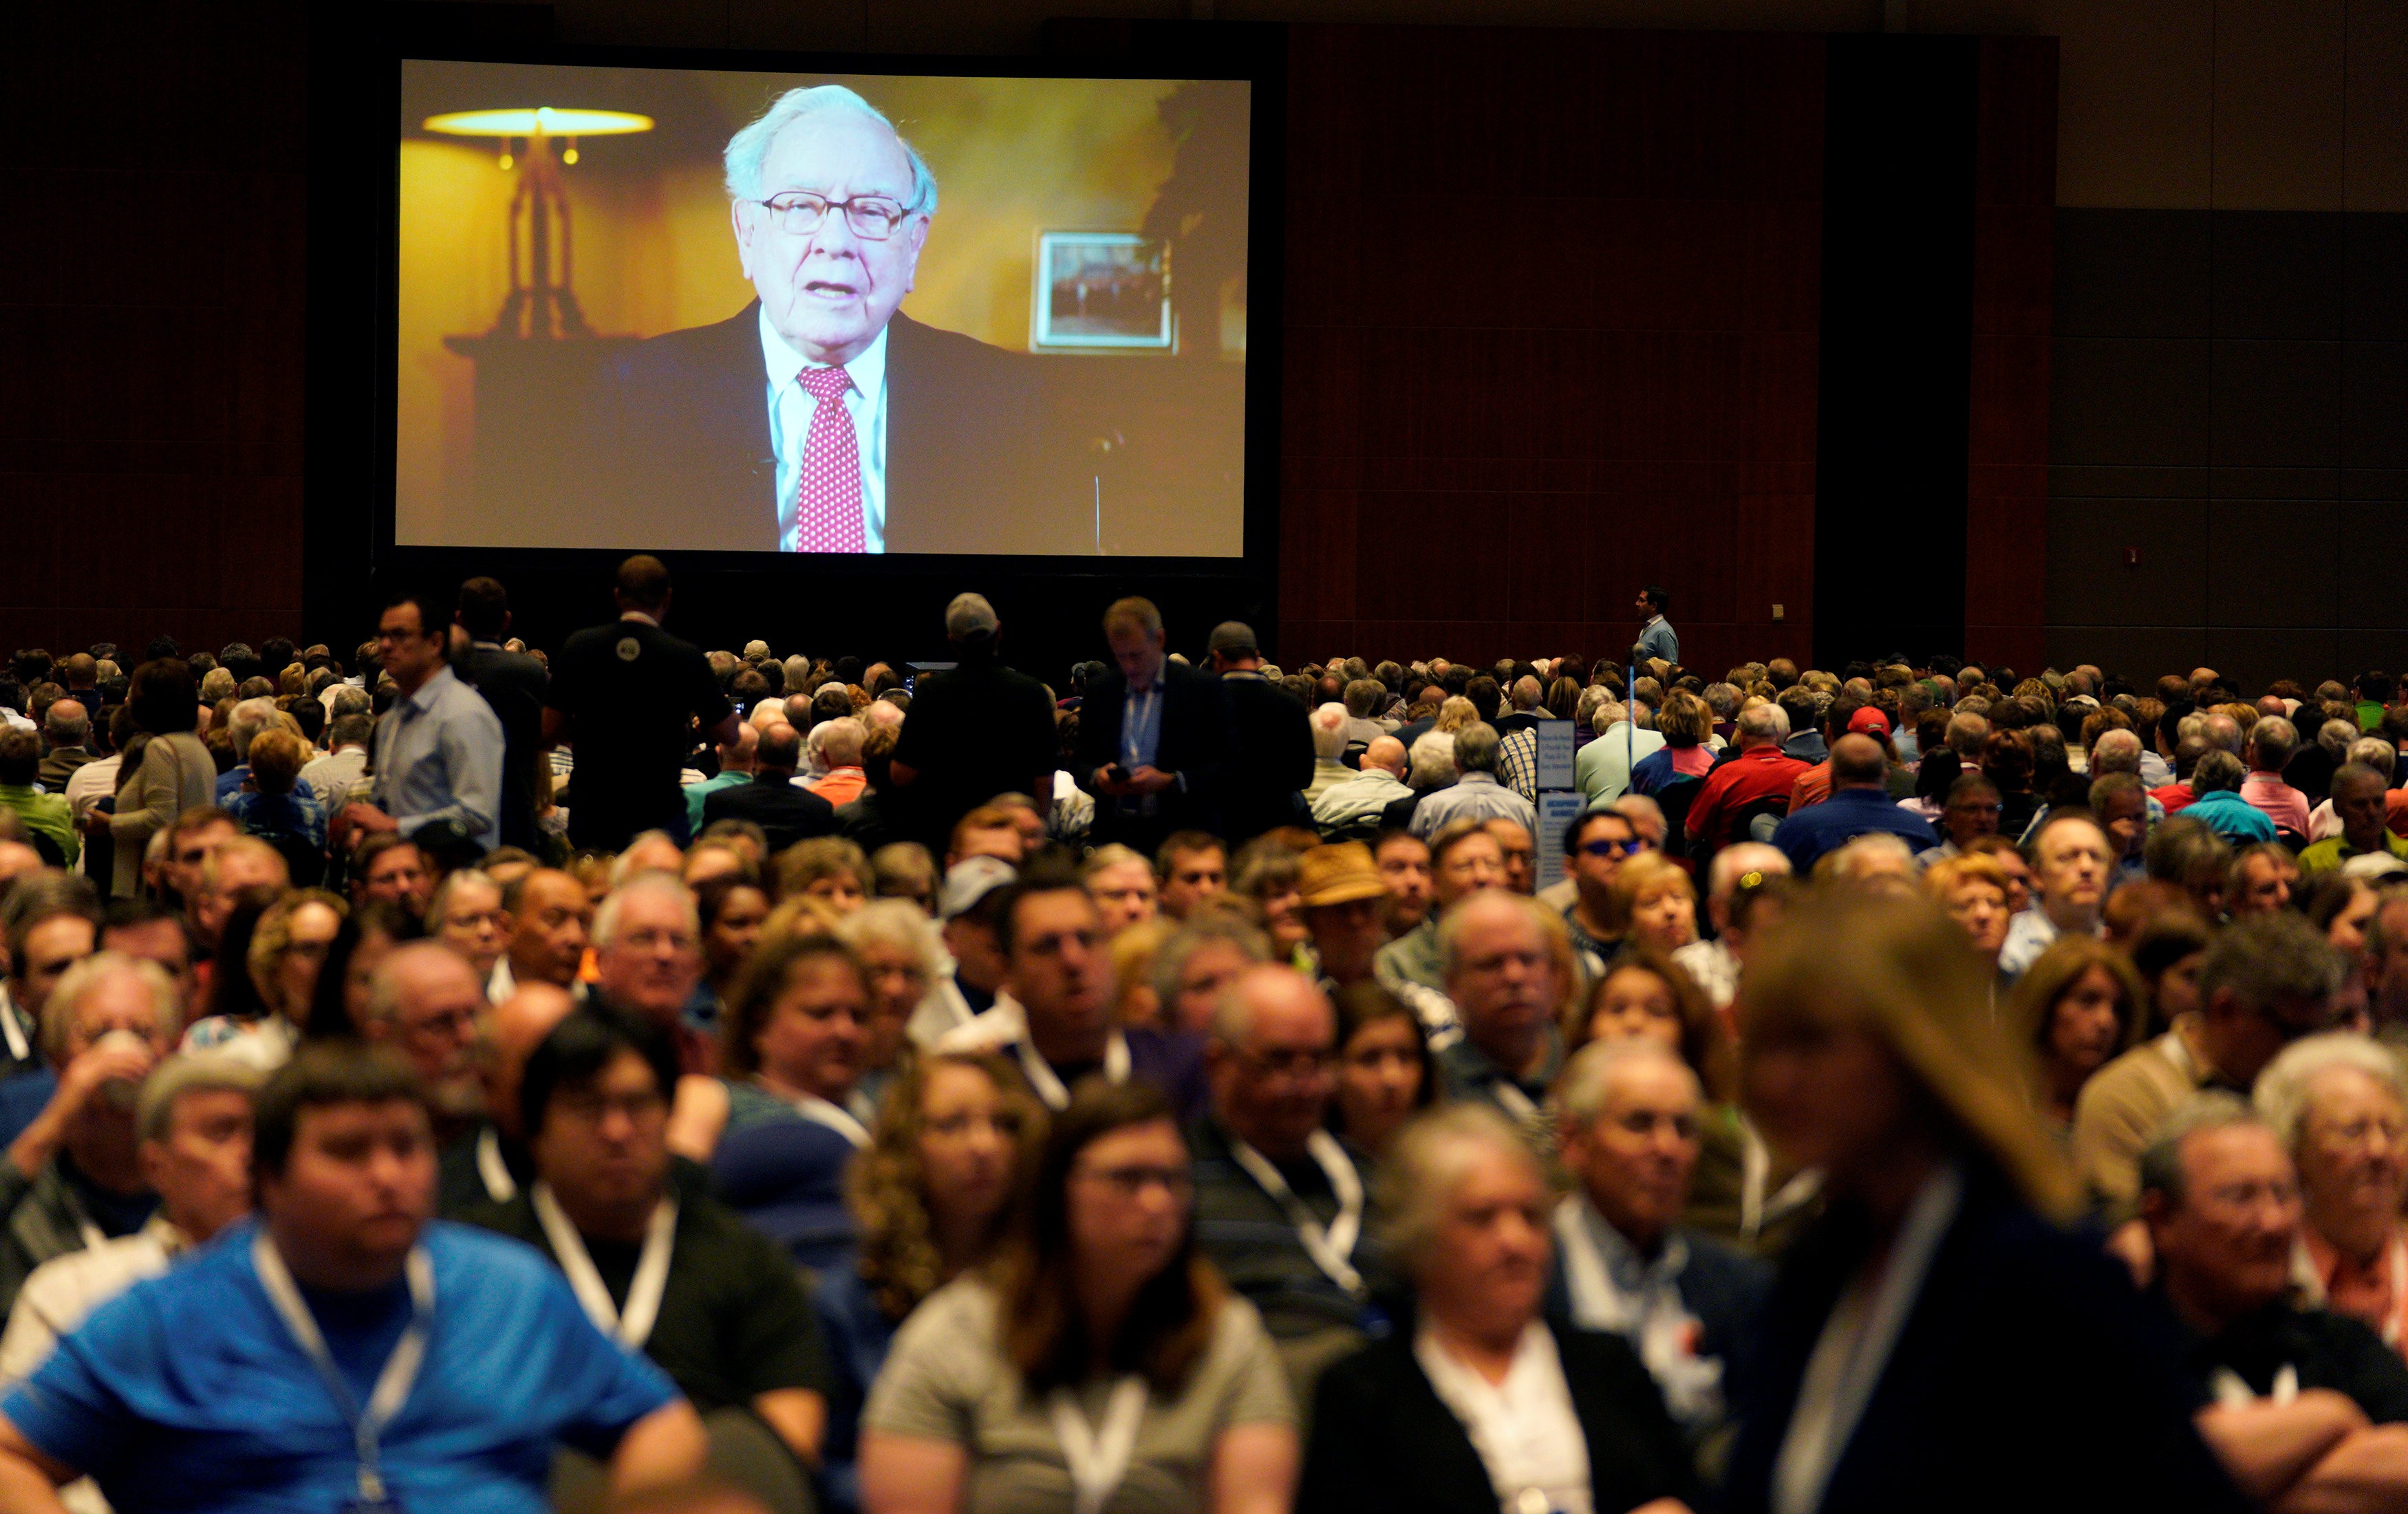 Warren Buffett, CEO of Berkshire Hathaway Inc is seen on a screen at the company's annual meeting in Omaha, Nebraska, U.S., May 5, 2018. Photo: REUTERS/Rick Wilking